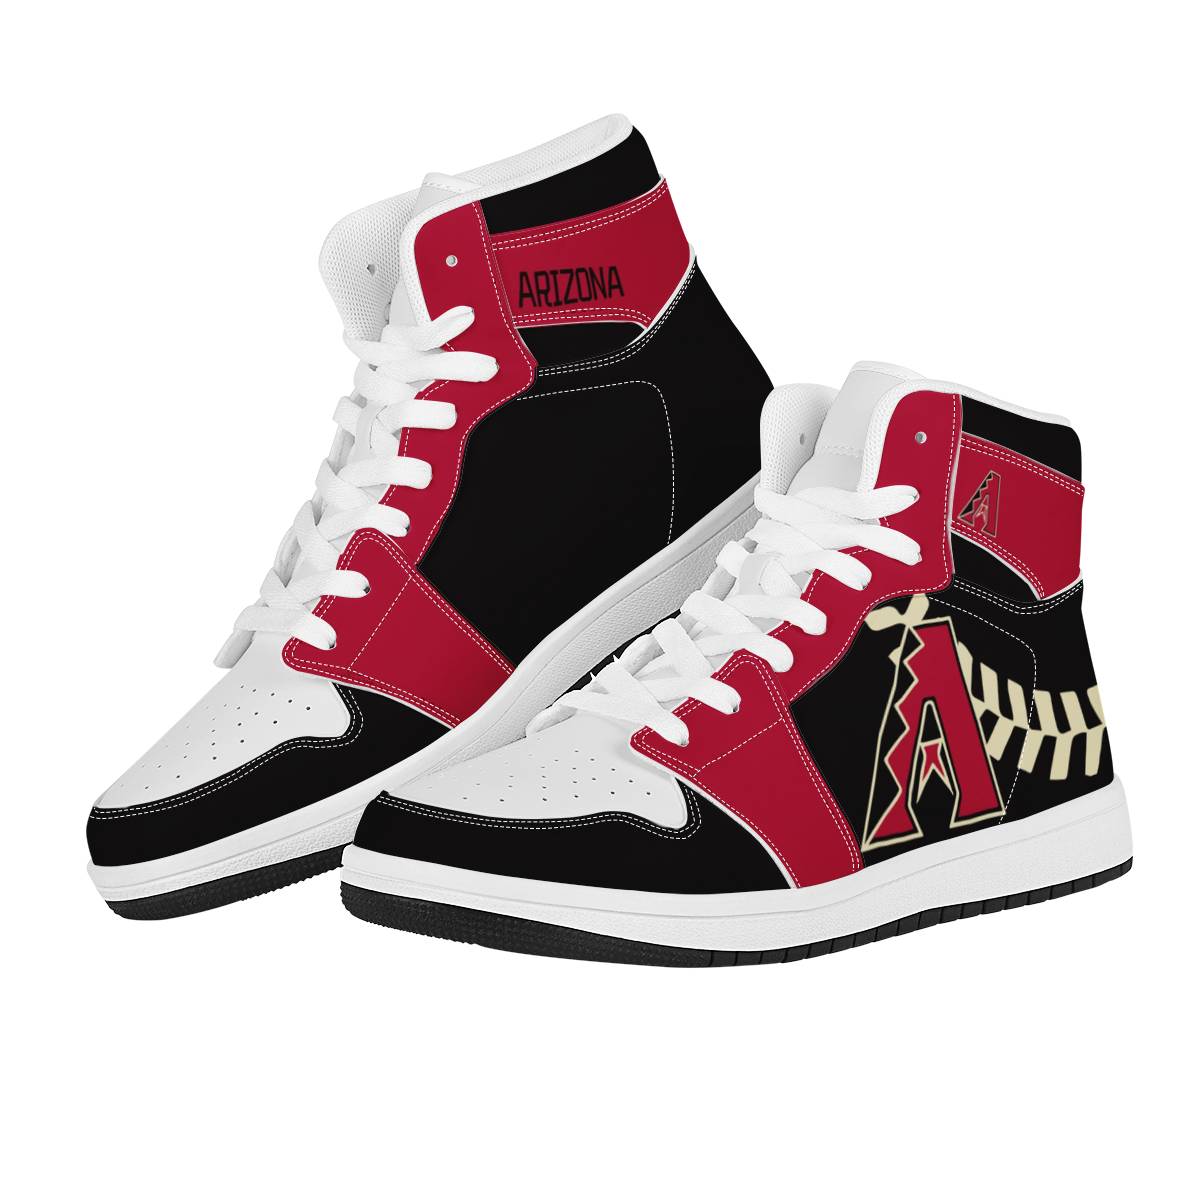 Men's Arizona Diamondbacks High Top Leather AJ1 Sneakers 001